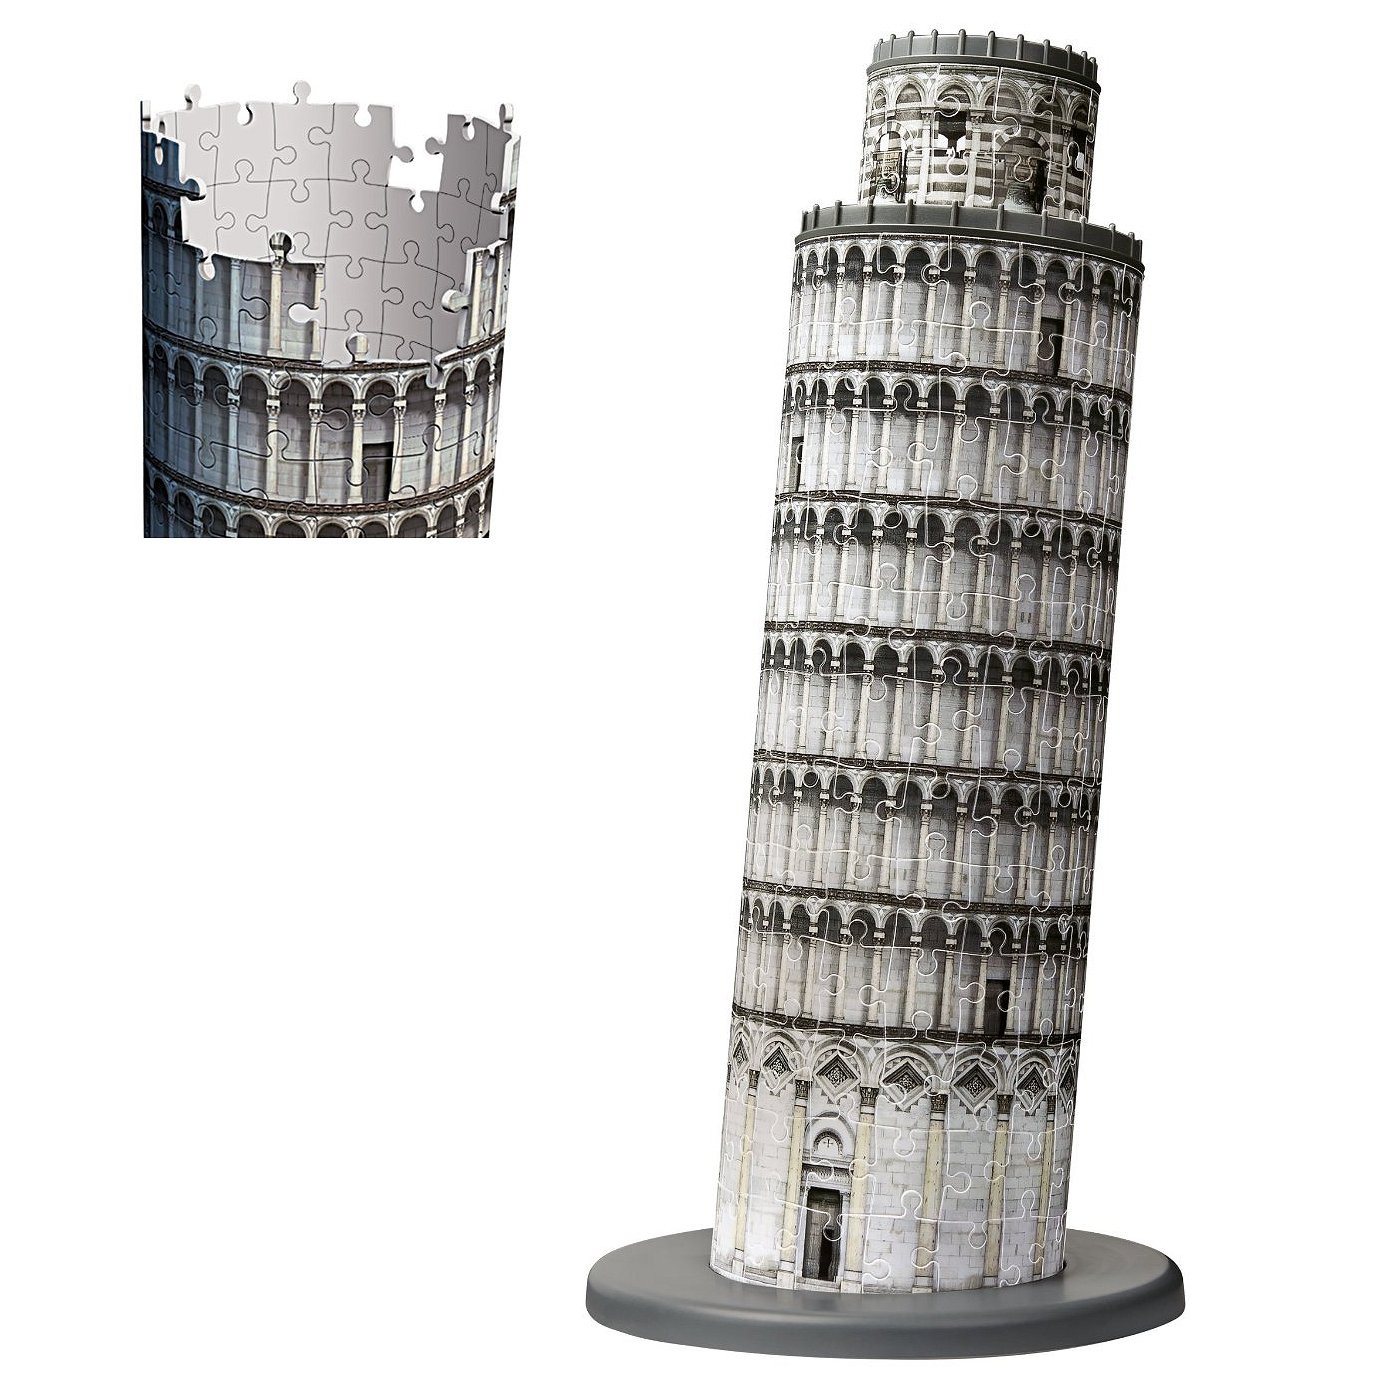 Schiefer Turm Pisa Italien 3D Puzzle Metall Modell Laser Cut Bausatz,Iconx 